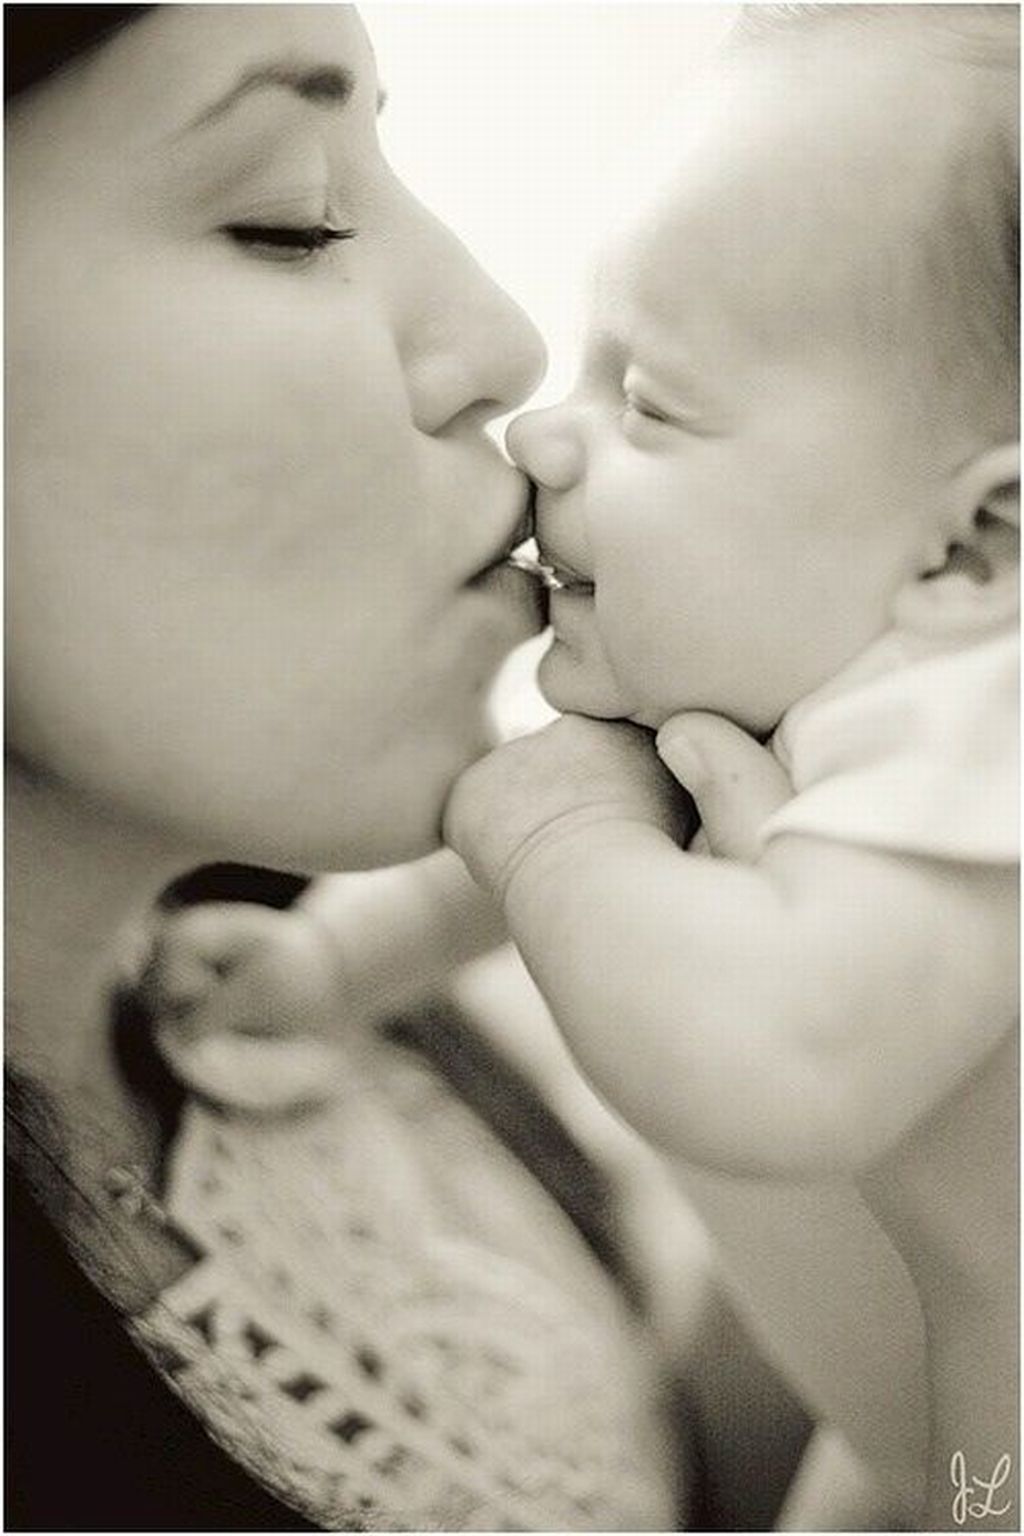 Поцелую маму слушать. Поцелуй матери. Ребенок целует. Мама целует младенца. Детский поцелуй.